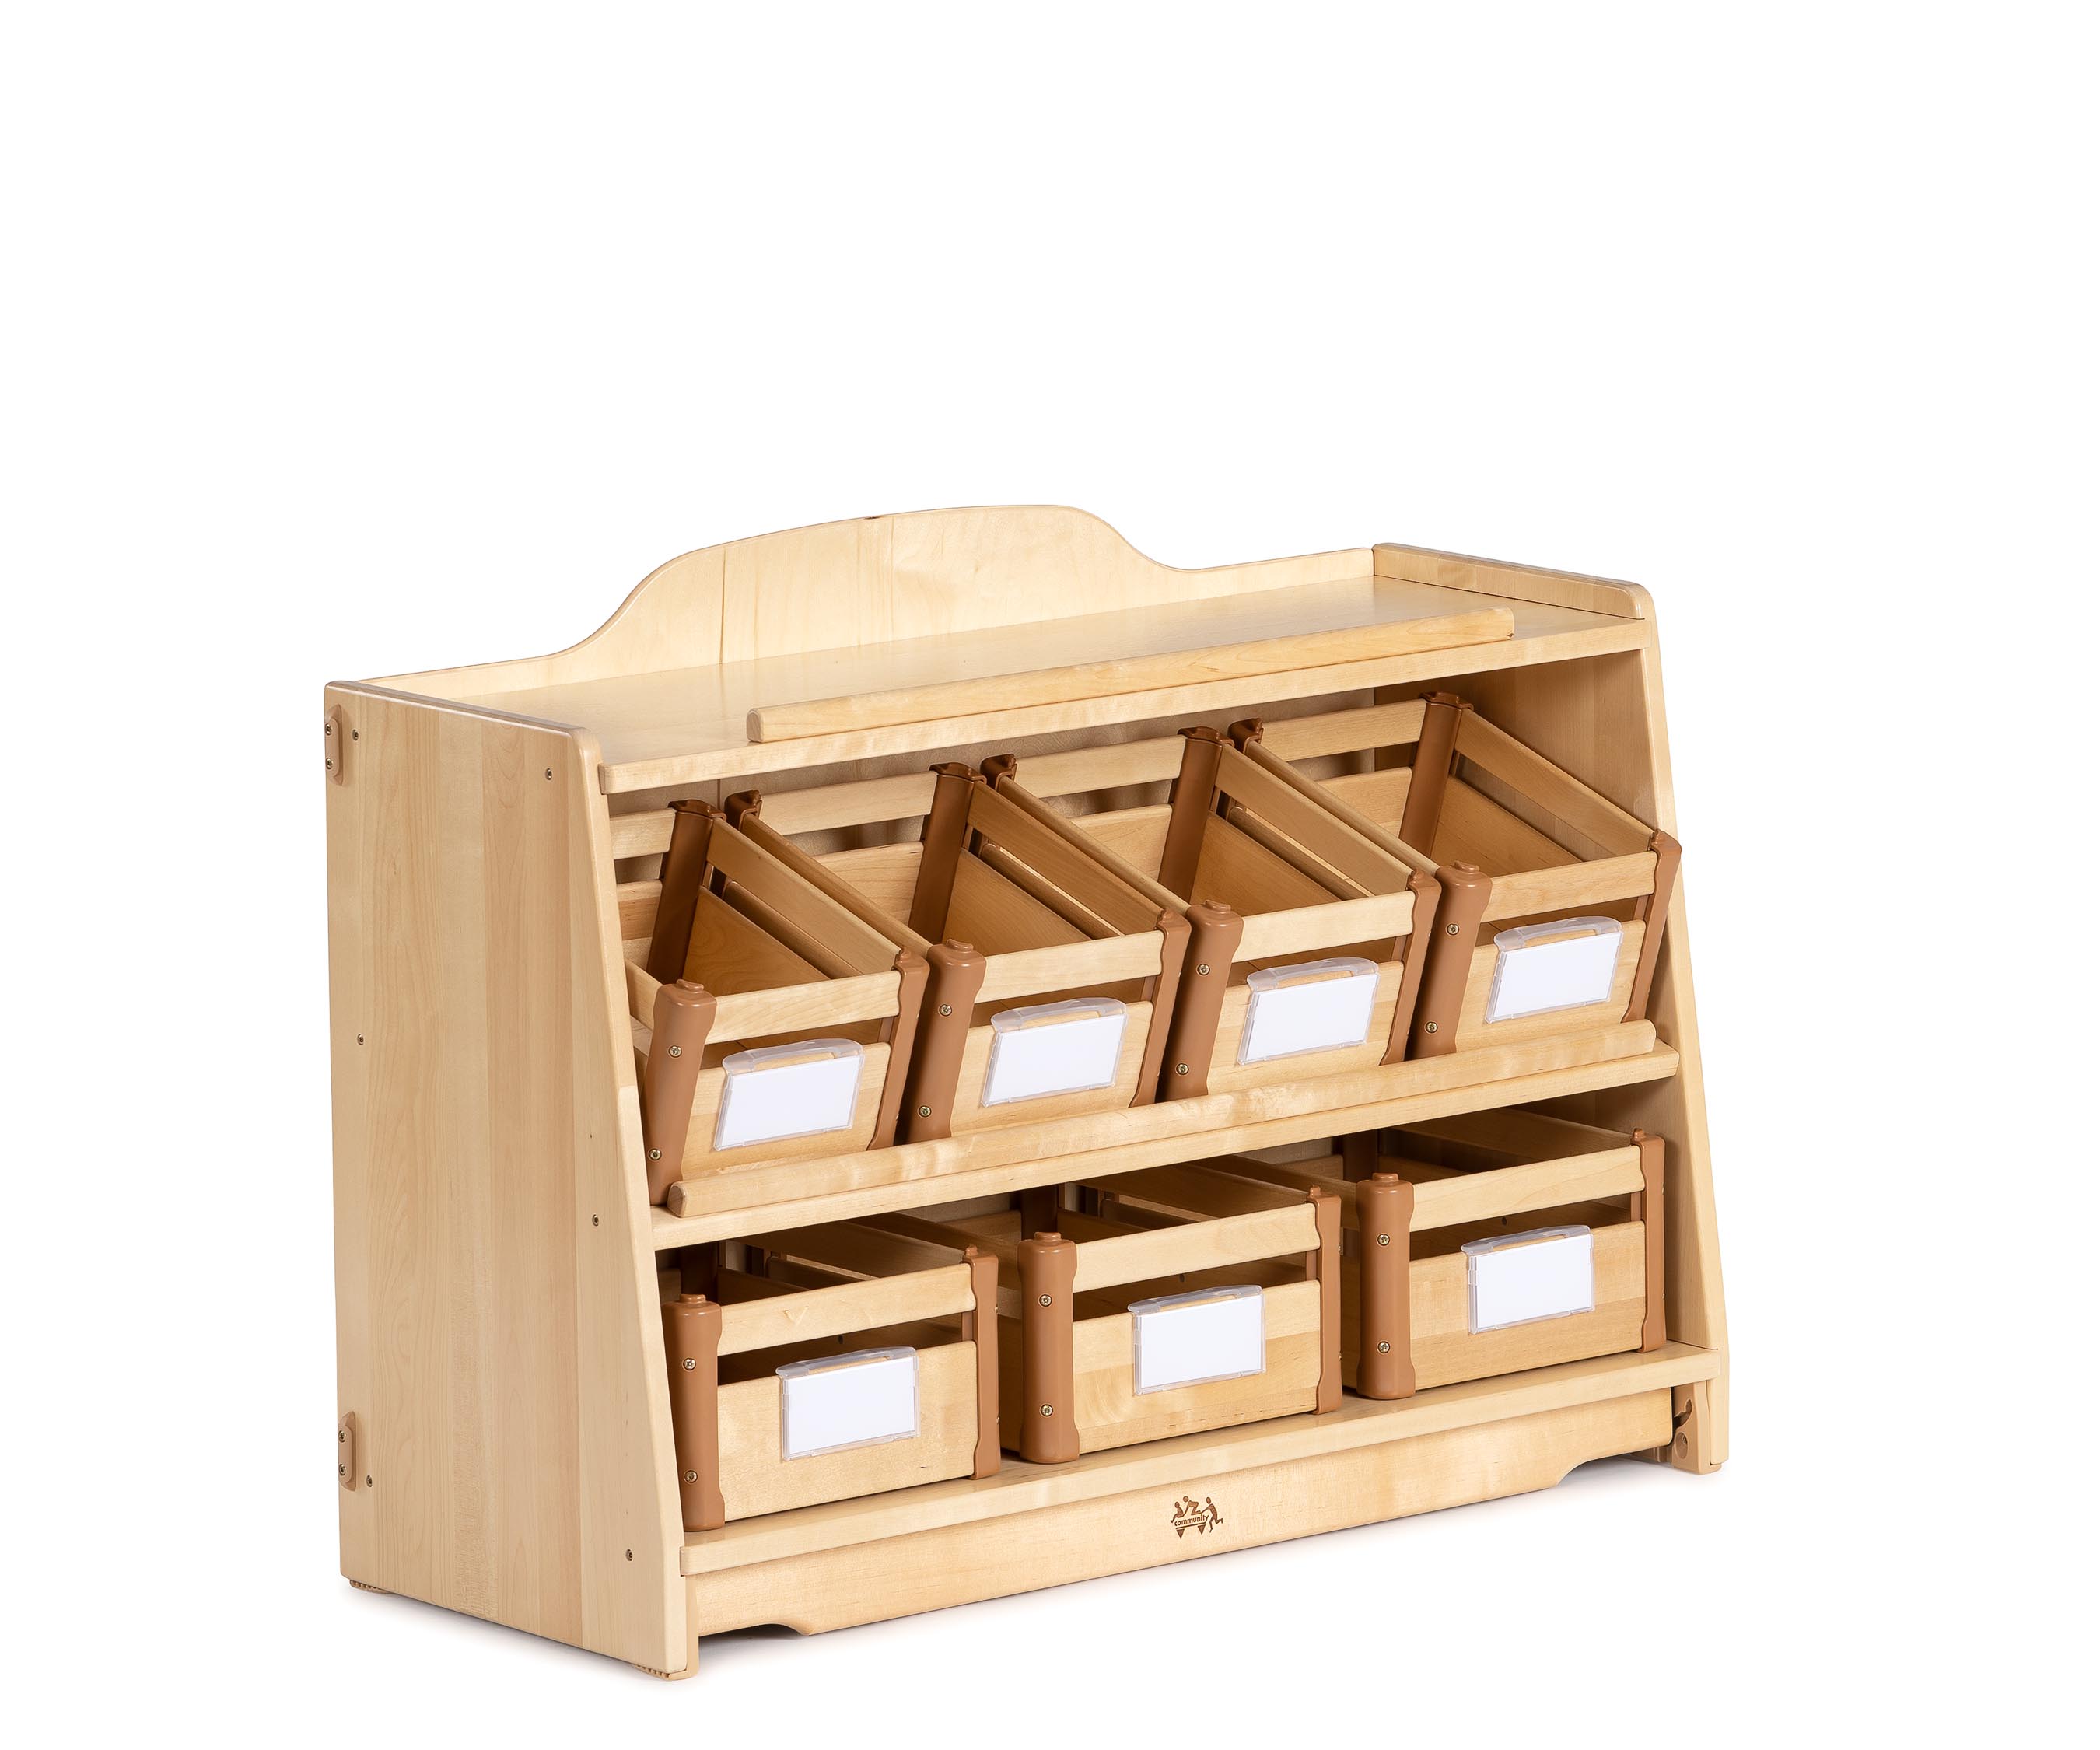 Craft shelf 3 w/ Carry crates